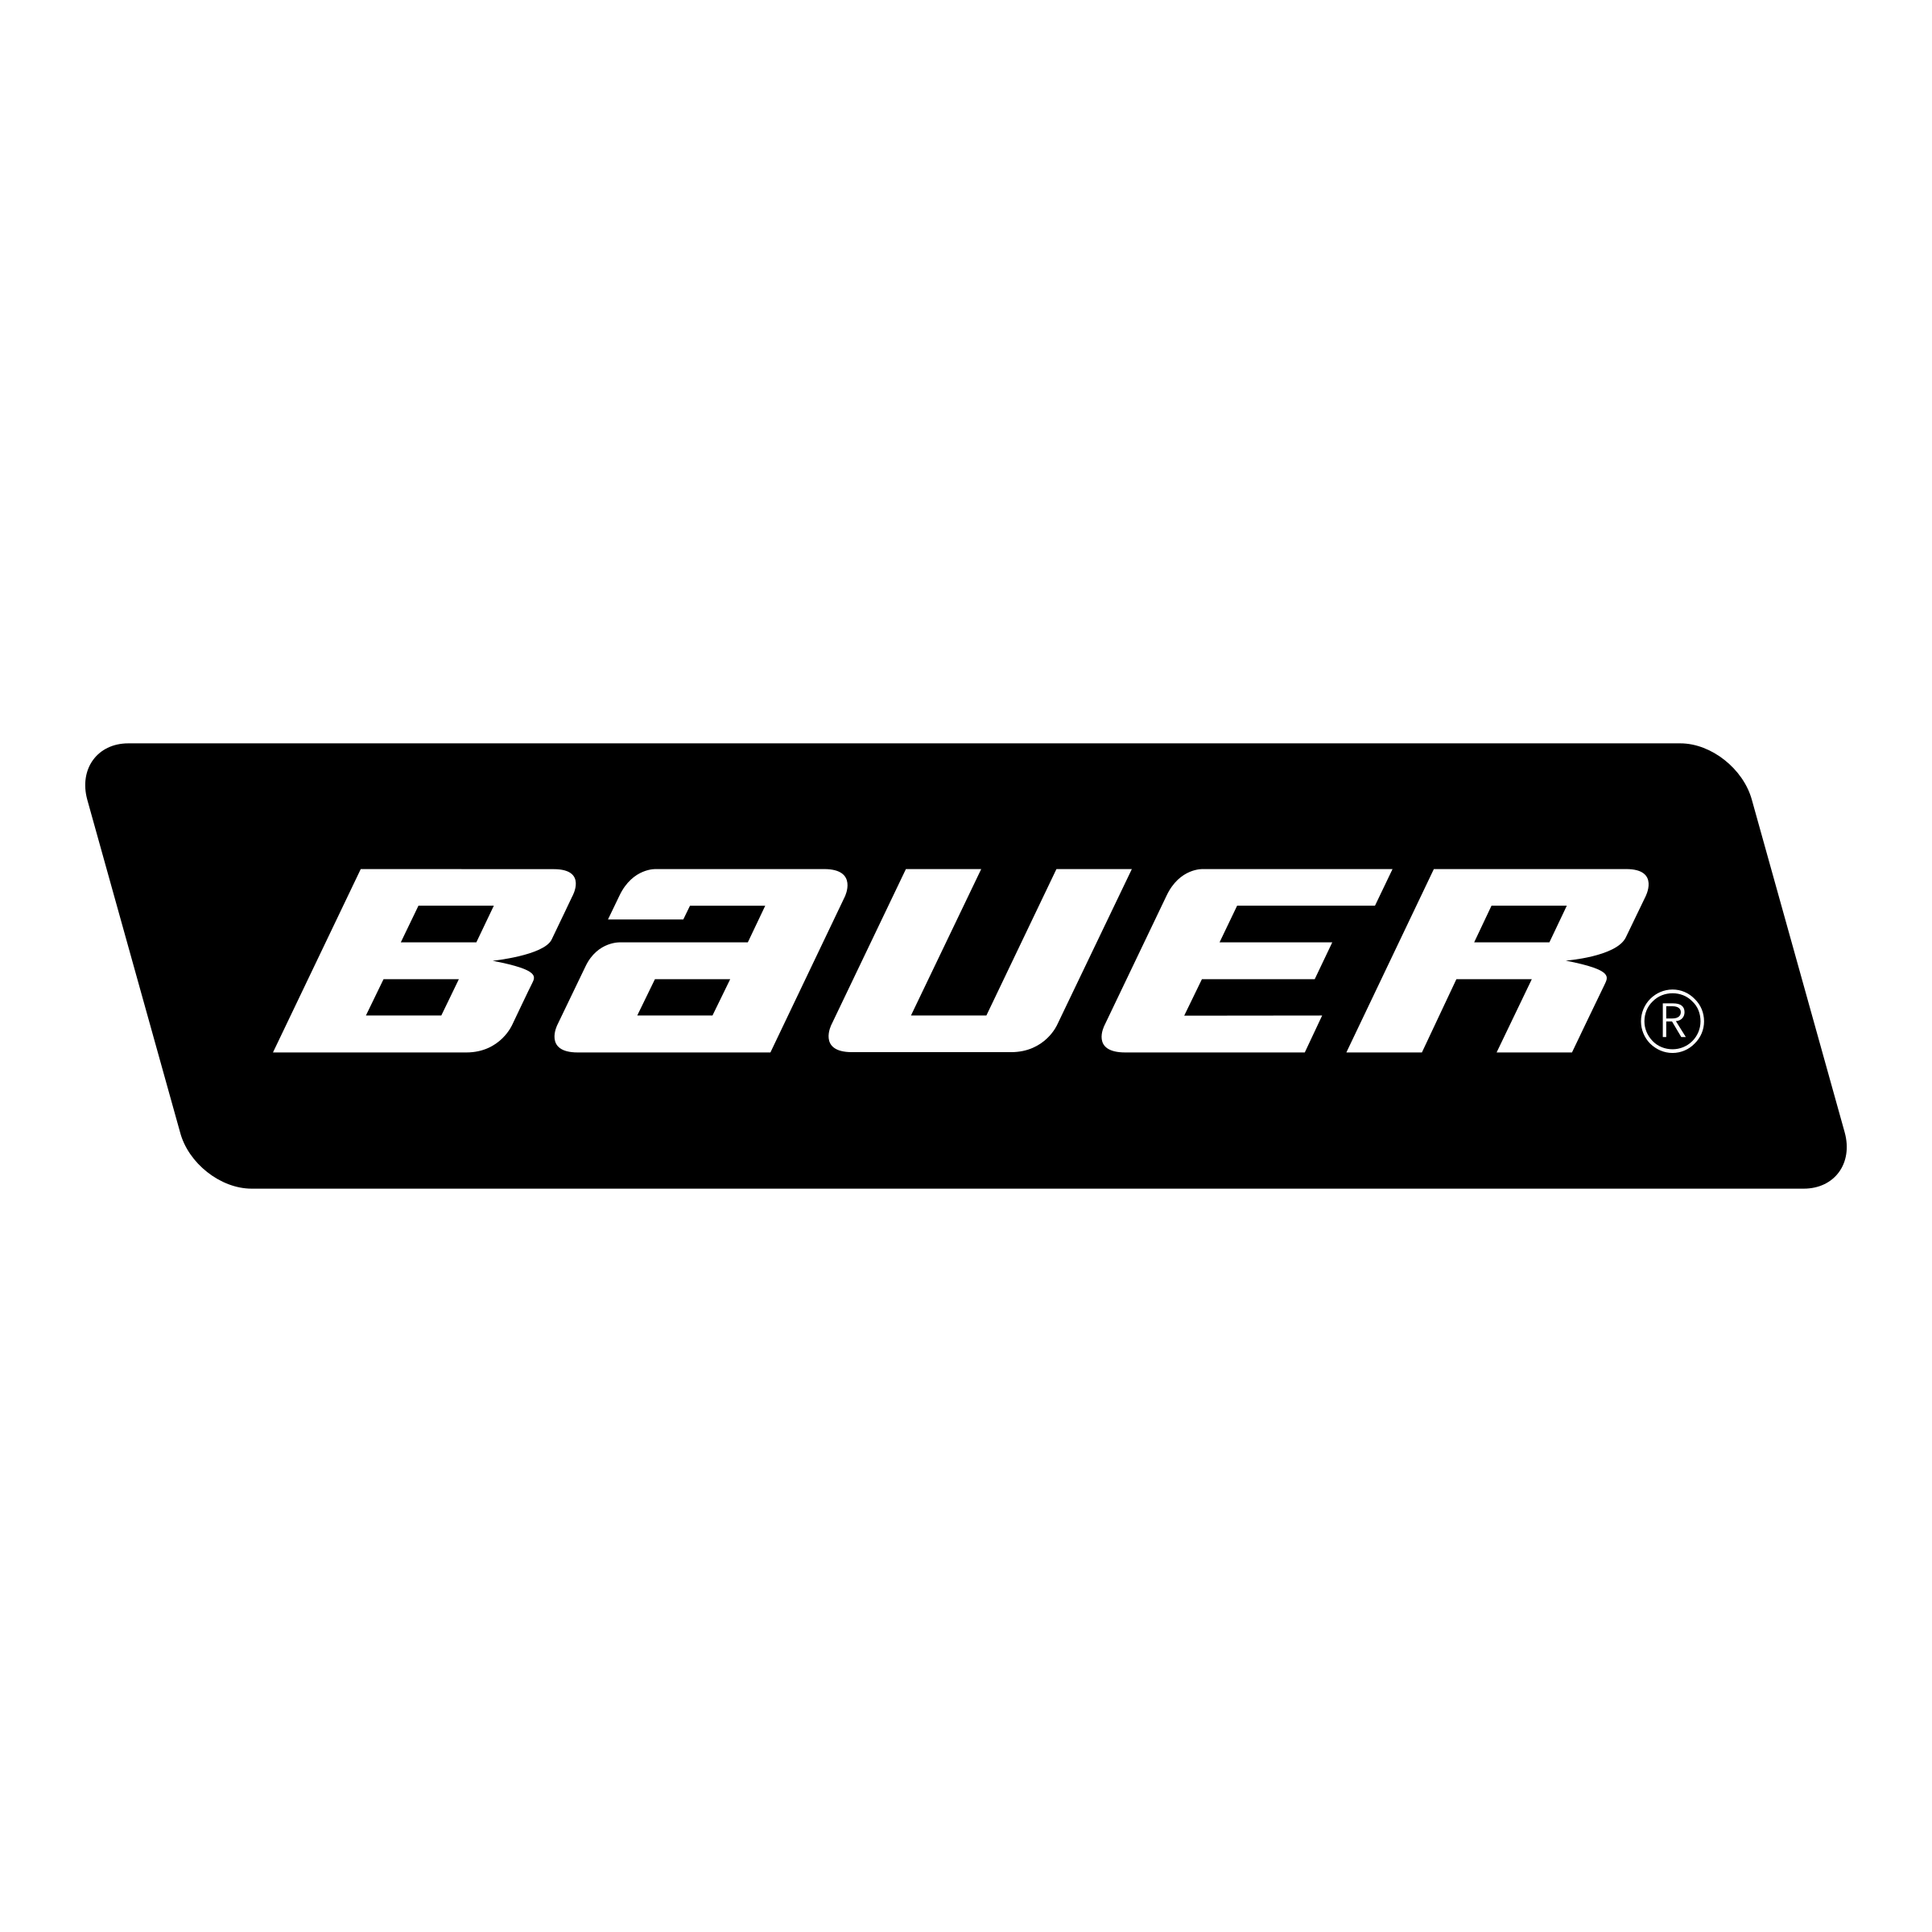 Bauer Logo - Bauer Logo PNG Transparent & SVG Vector - Freebie Supply